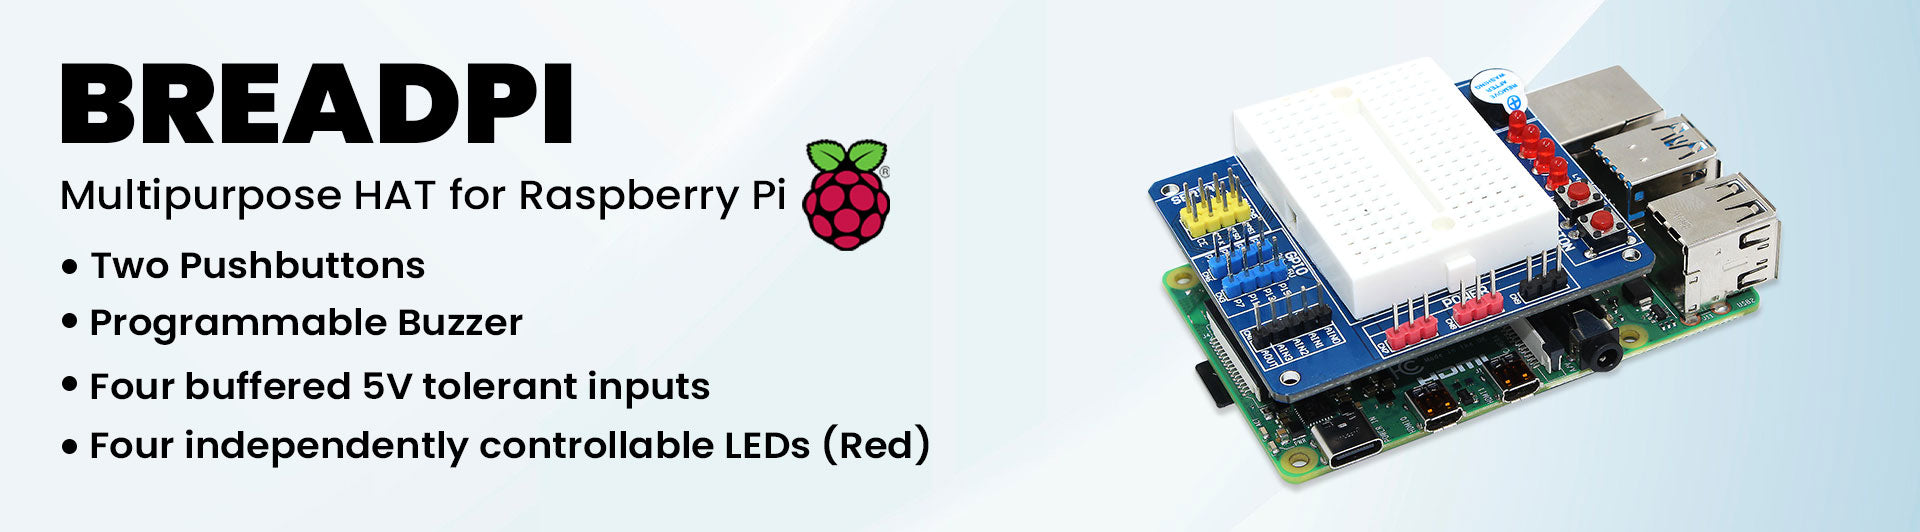 BreadPi - Breadboard HAT for Raspberry Pi